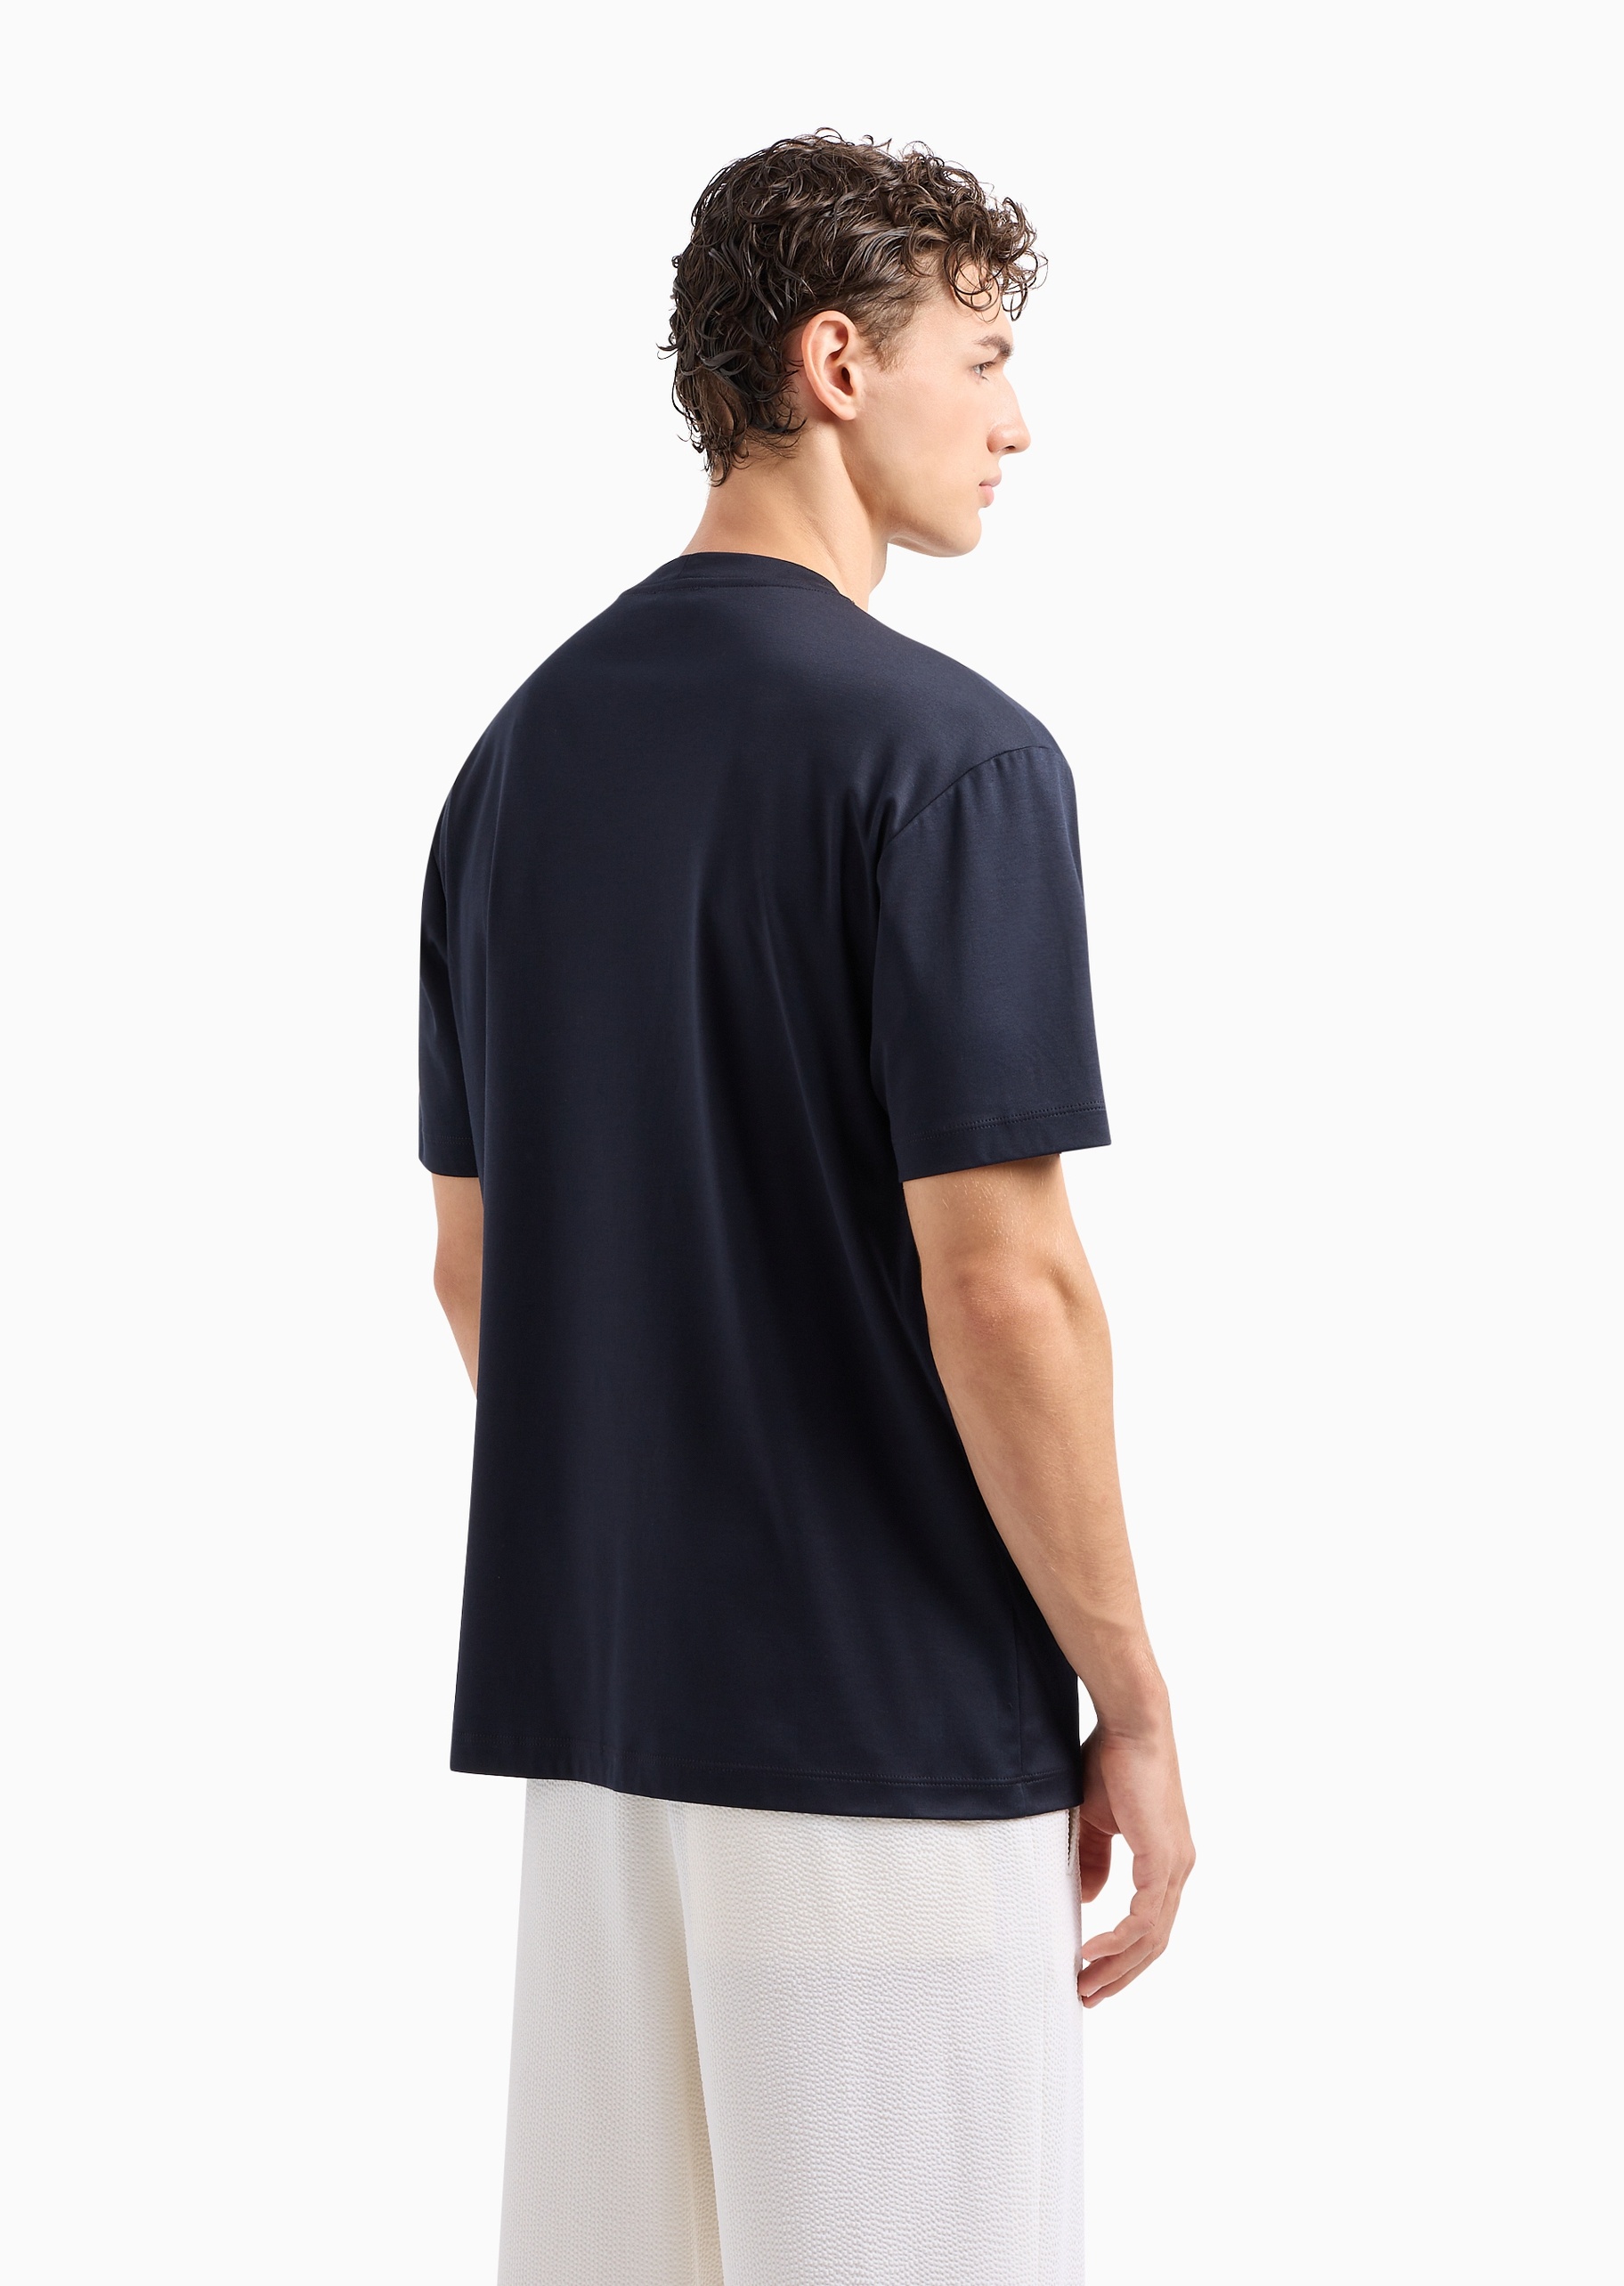 Giorgio Armani 男士全棉合身短袖圆领LOGO嵌饰T恤